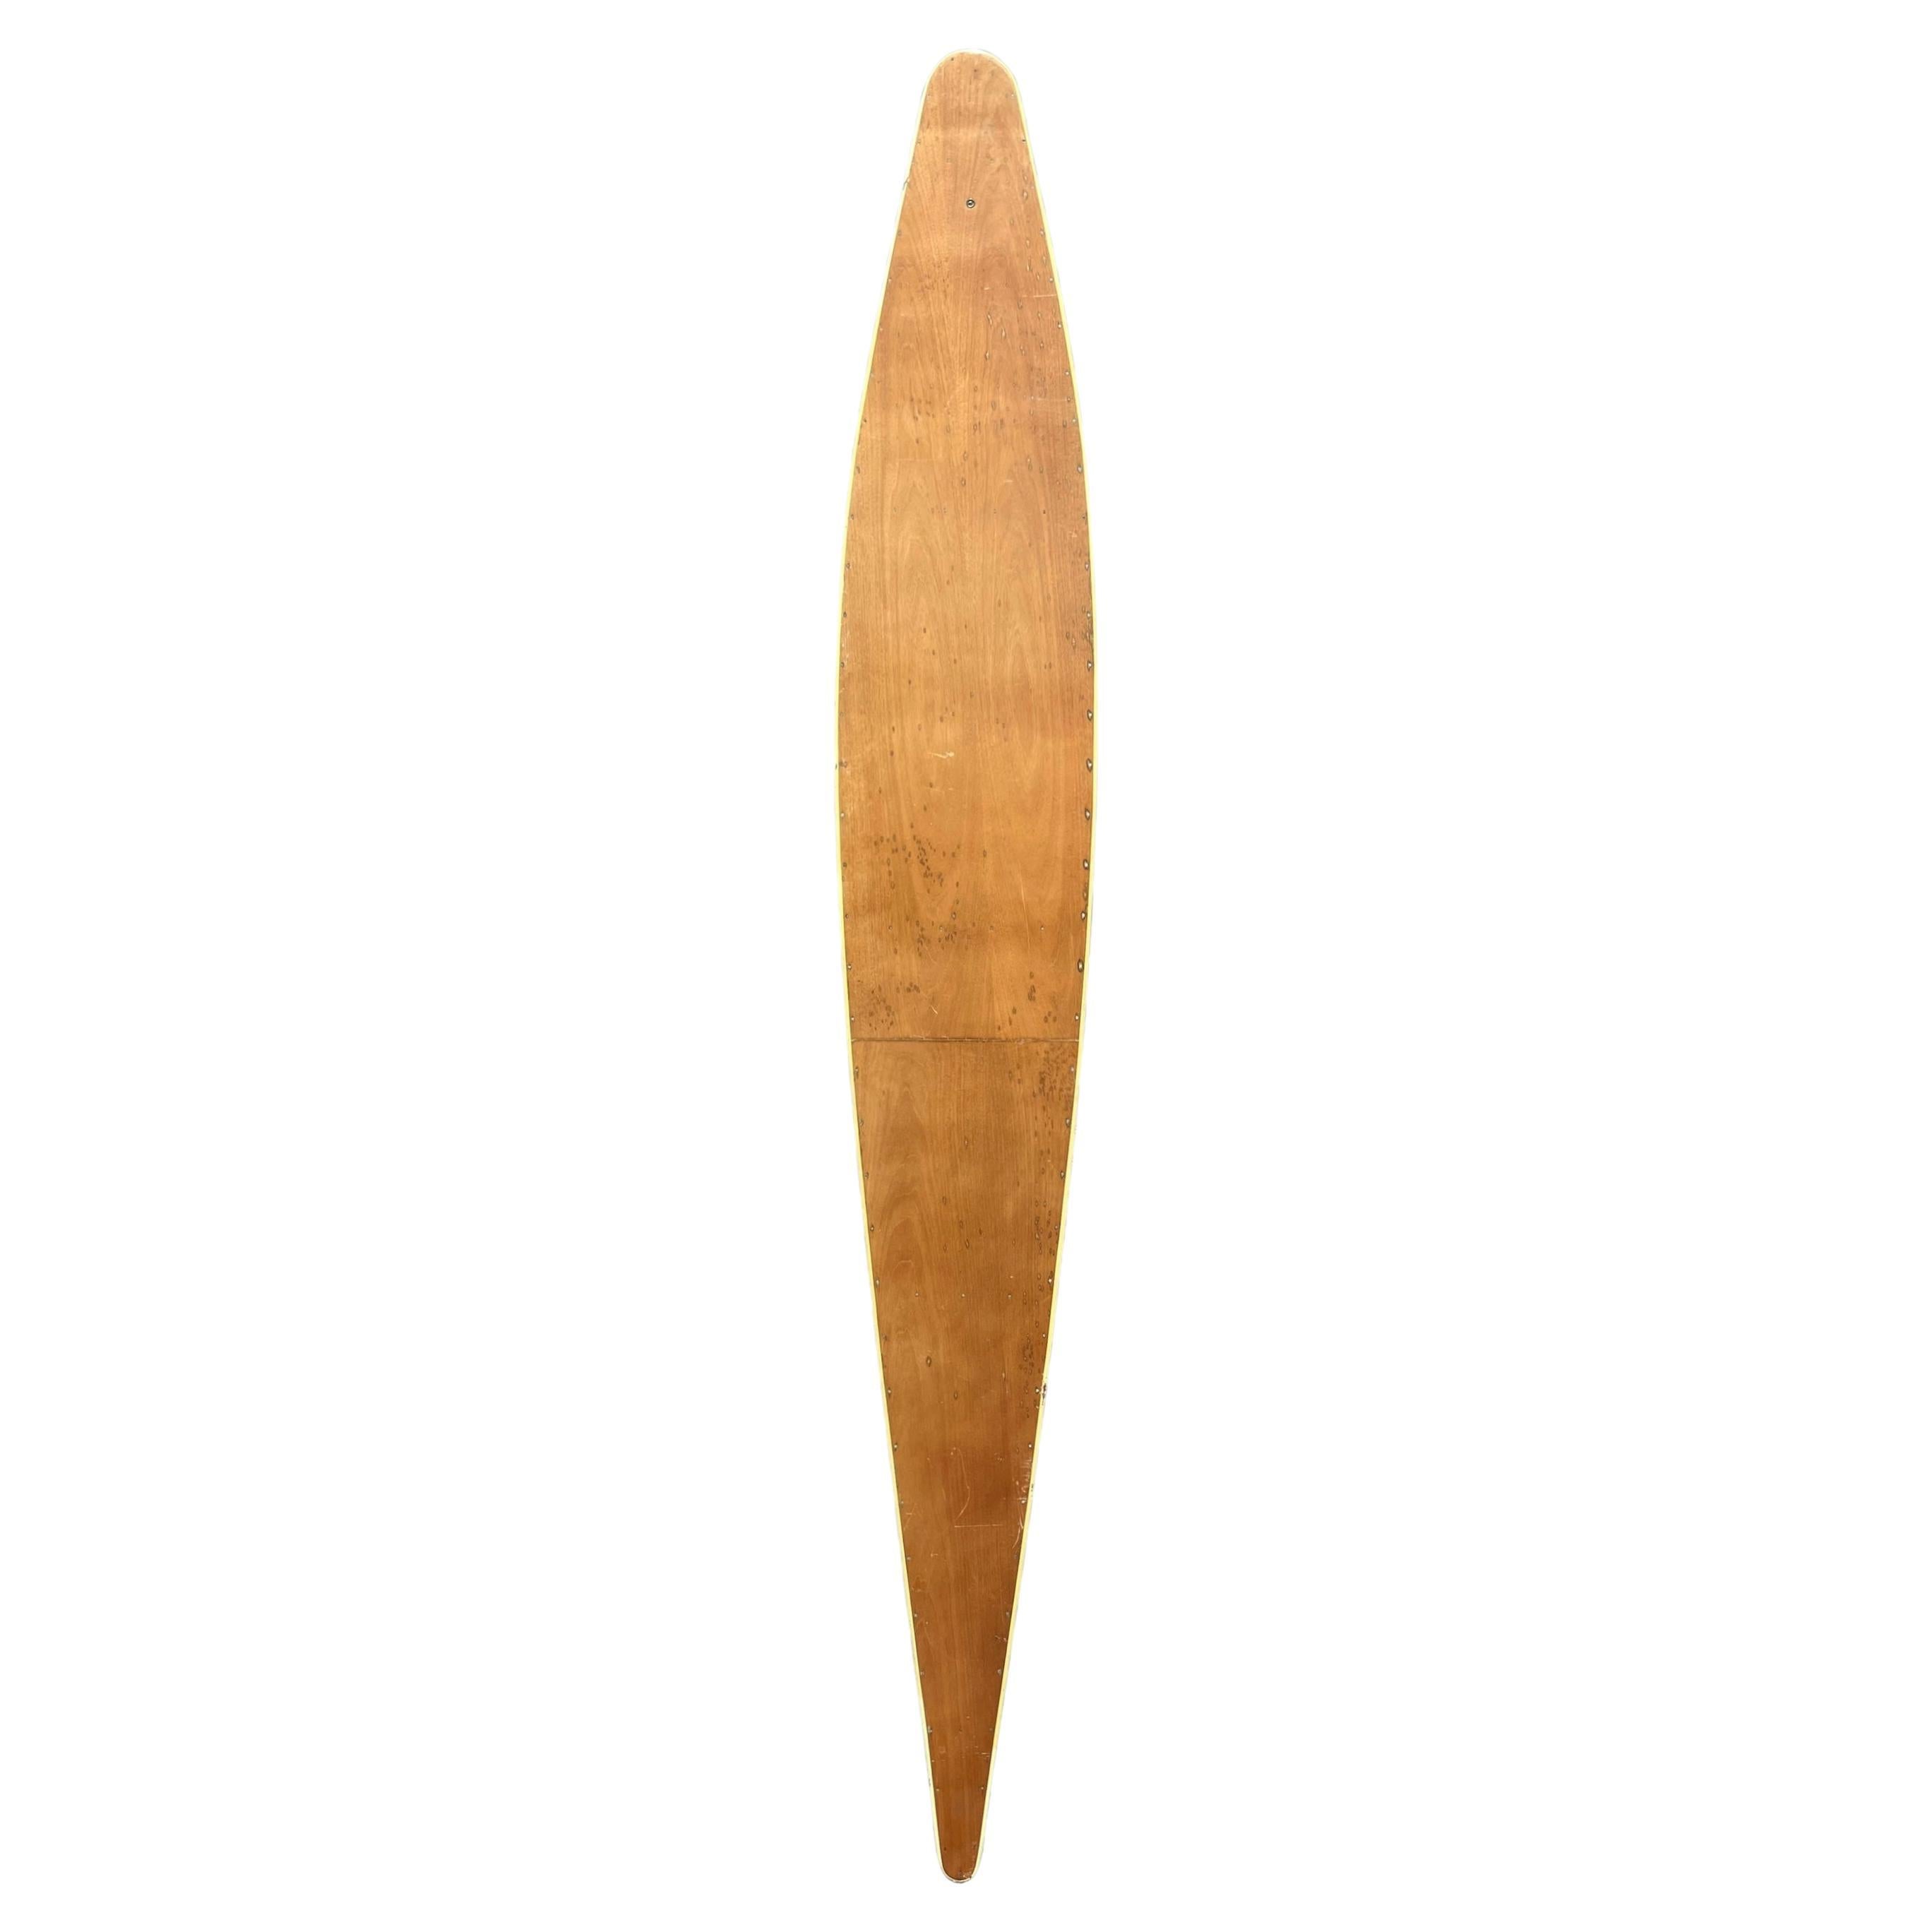 1930 Replica Tom Blake hollow wooden surfboard